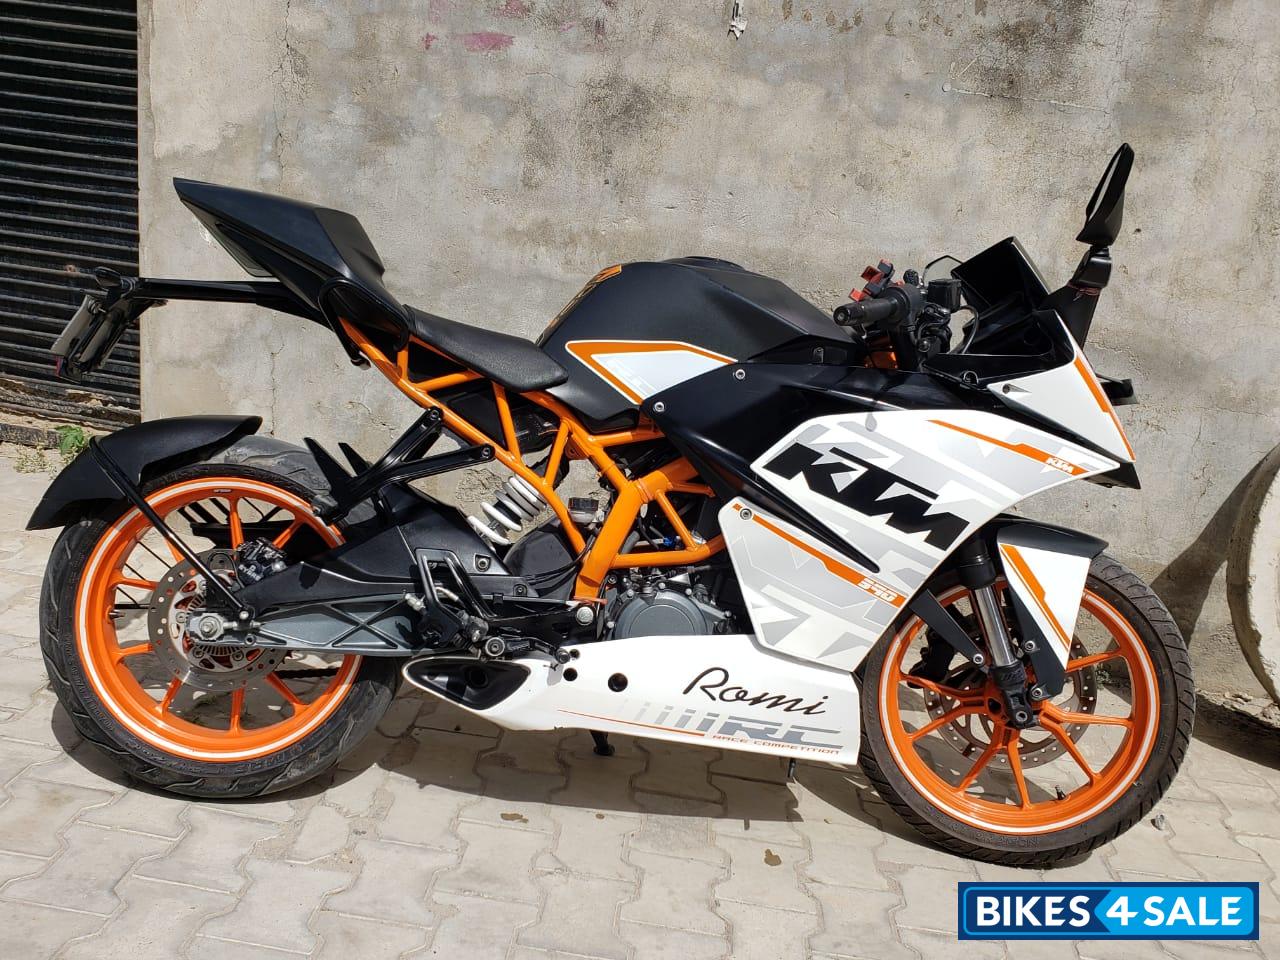 Used 2015 model KTM RC 390 for sale in Nawanshahr. ID 216399 - Bikes4Sale